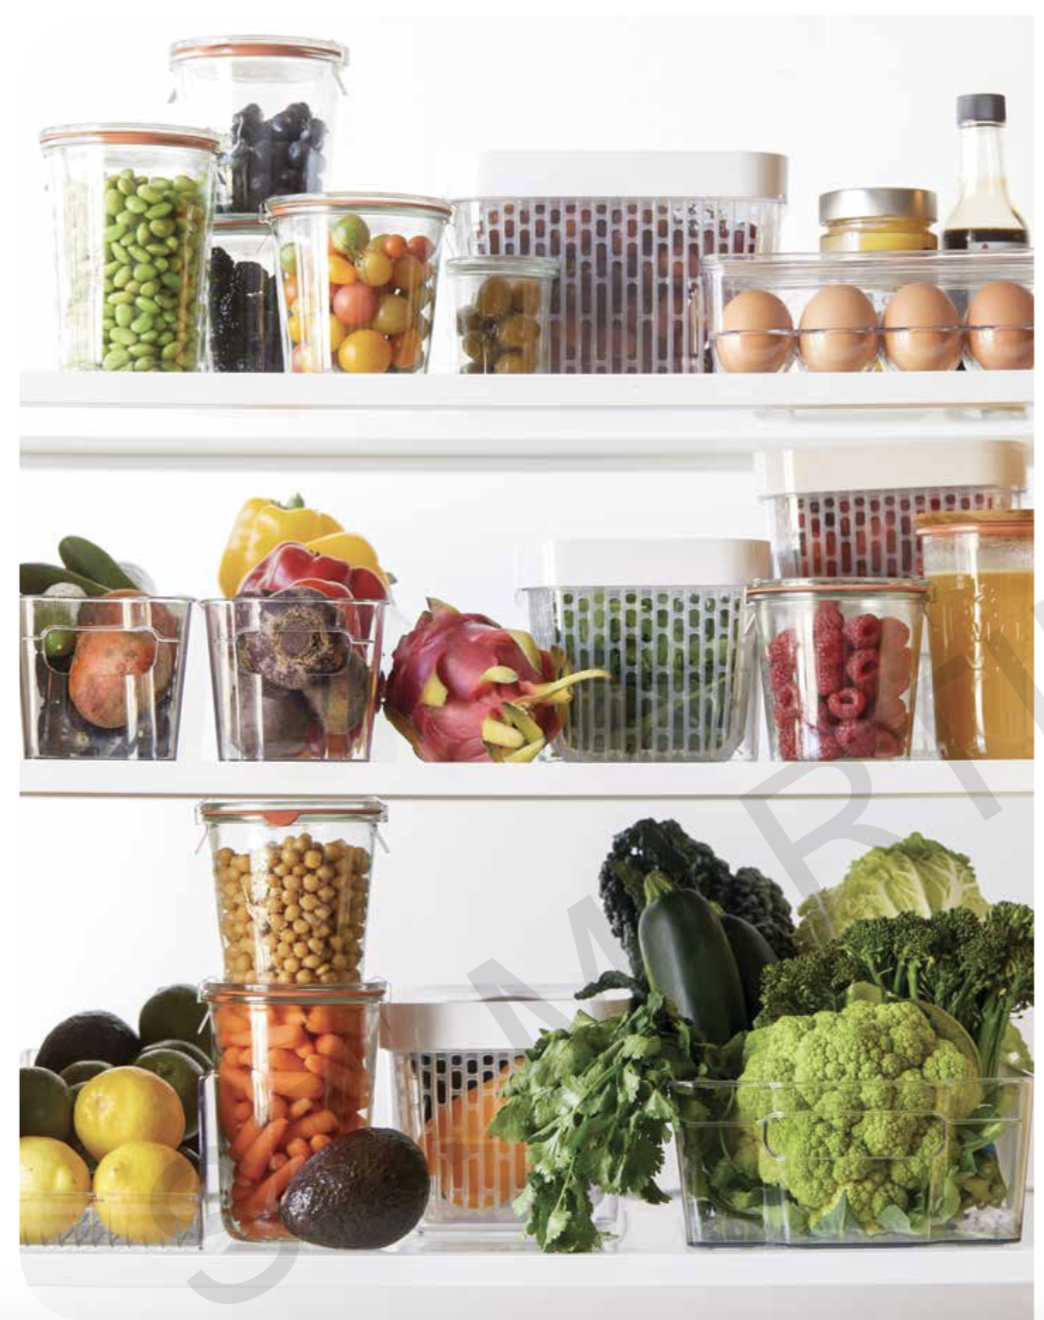 mareya ibrahim, fridge organization tips